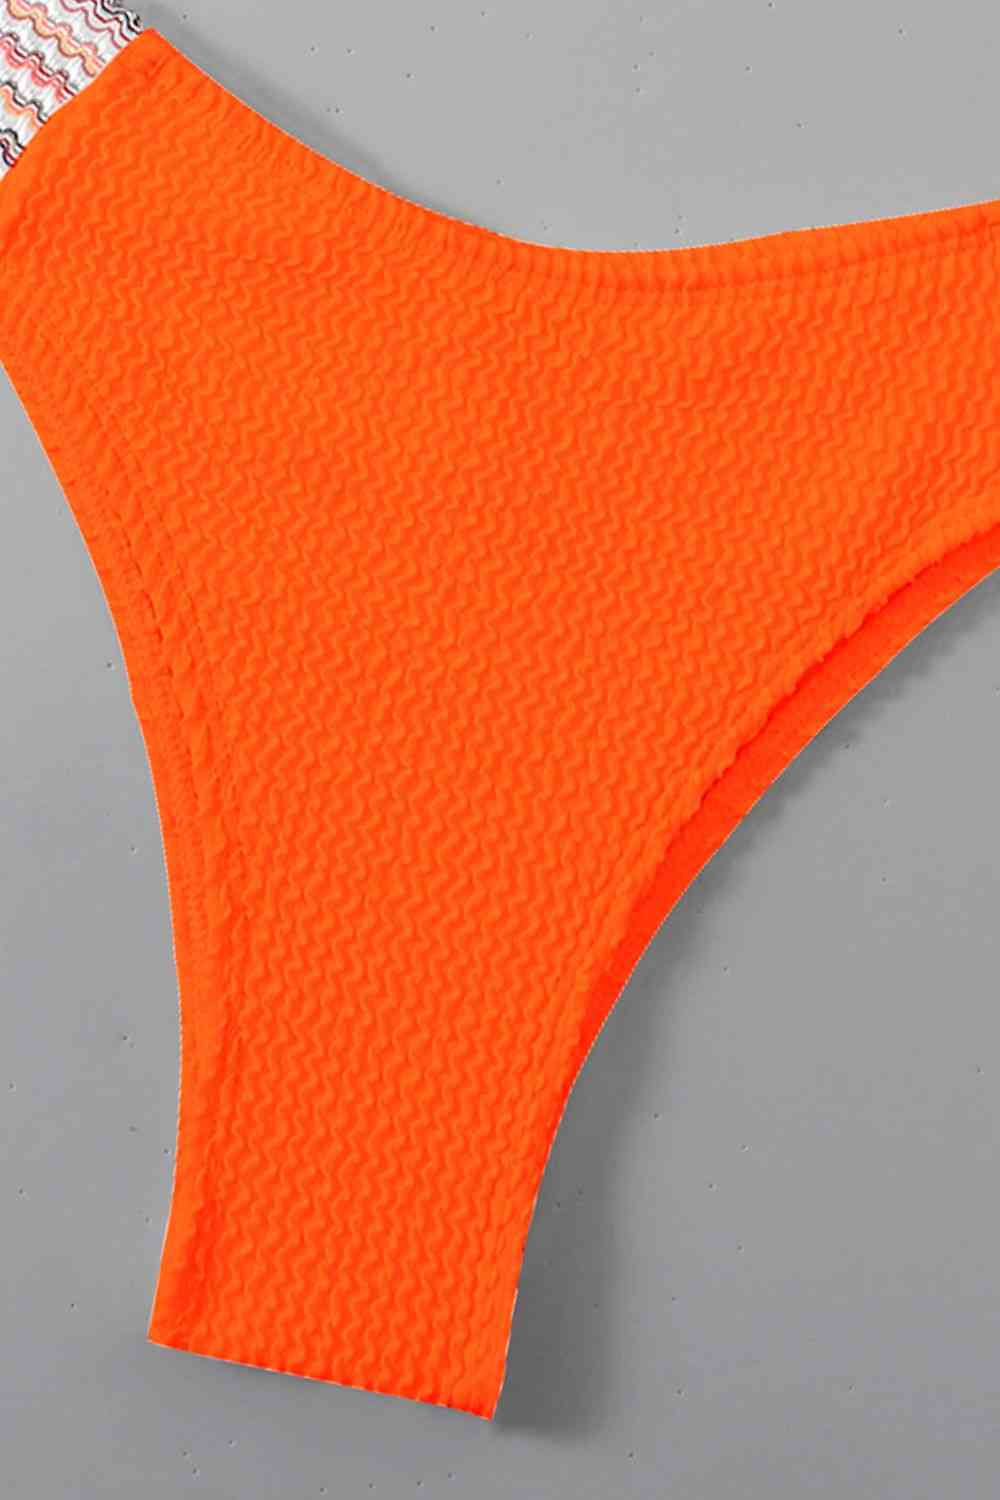 a close up of an orange piece of cloth